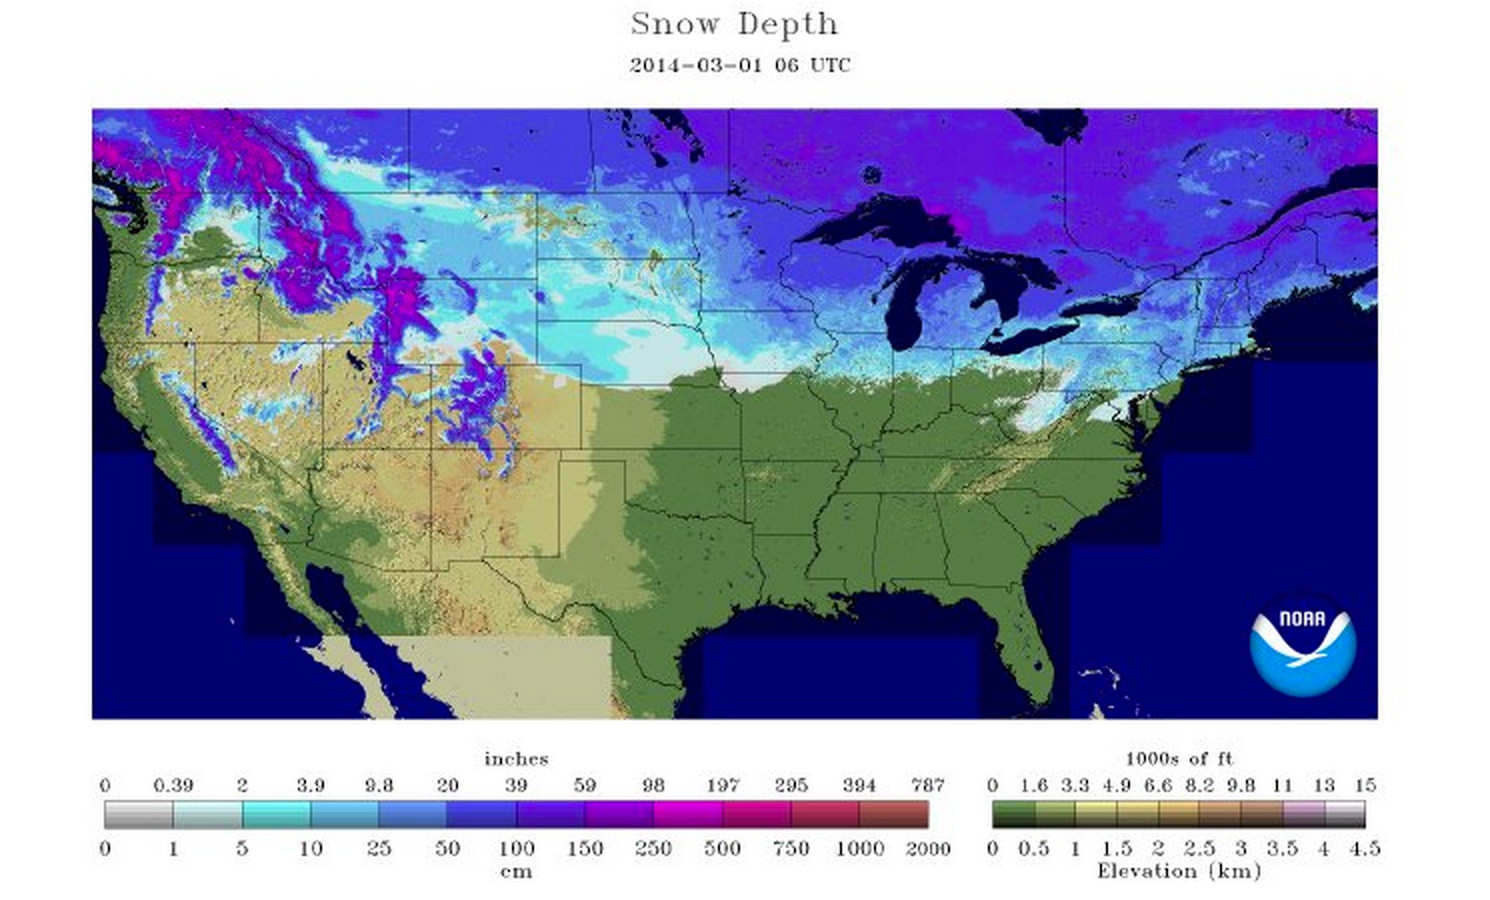 U.S. Snow Depth March 1, 2014 | NOAA